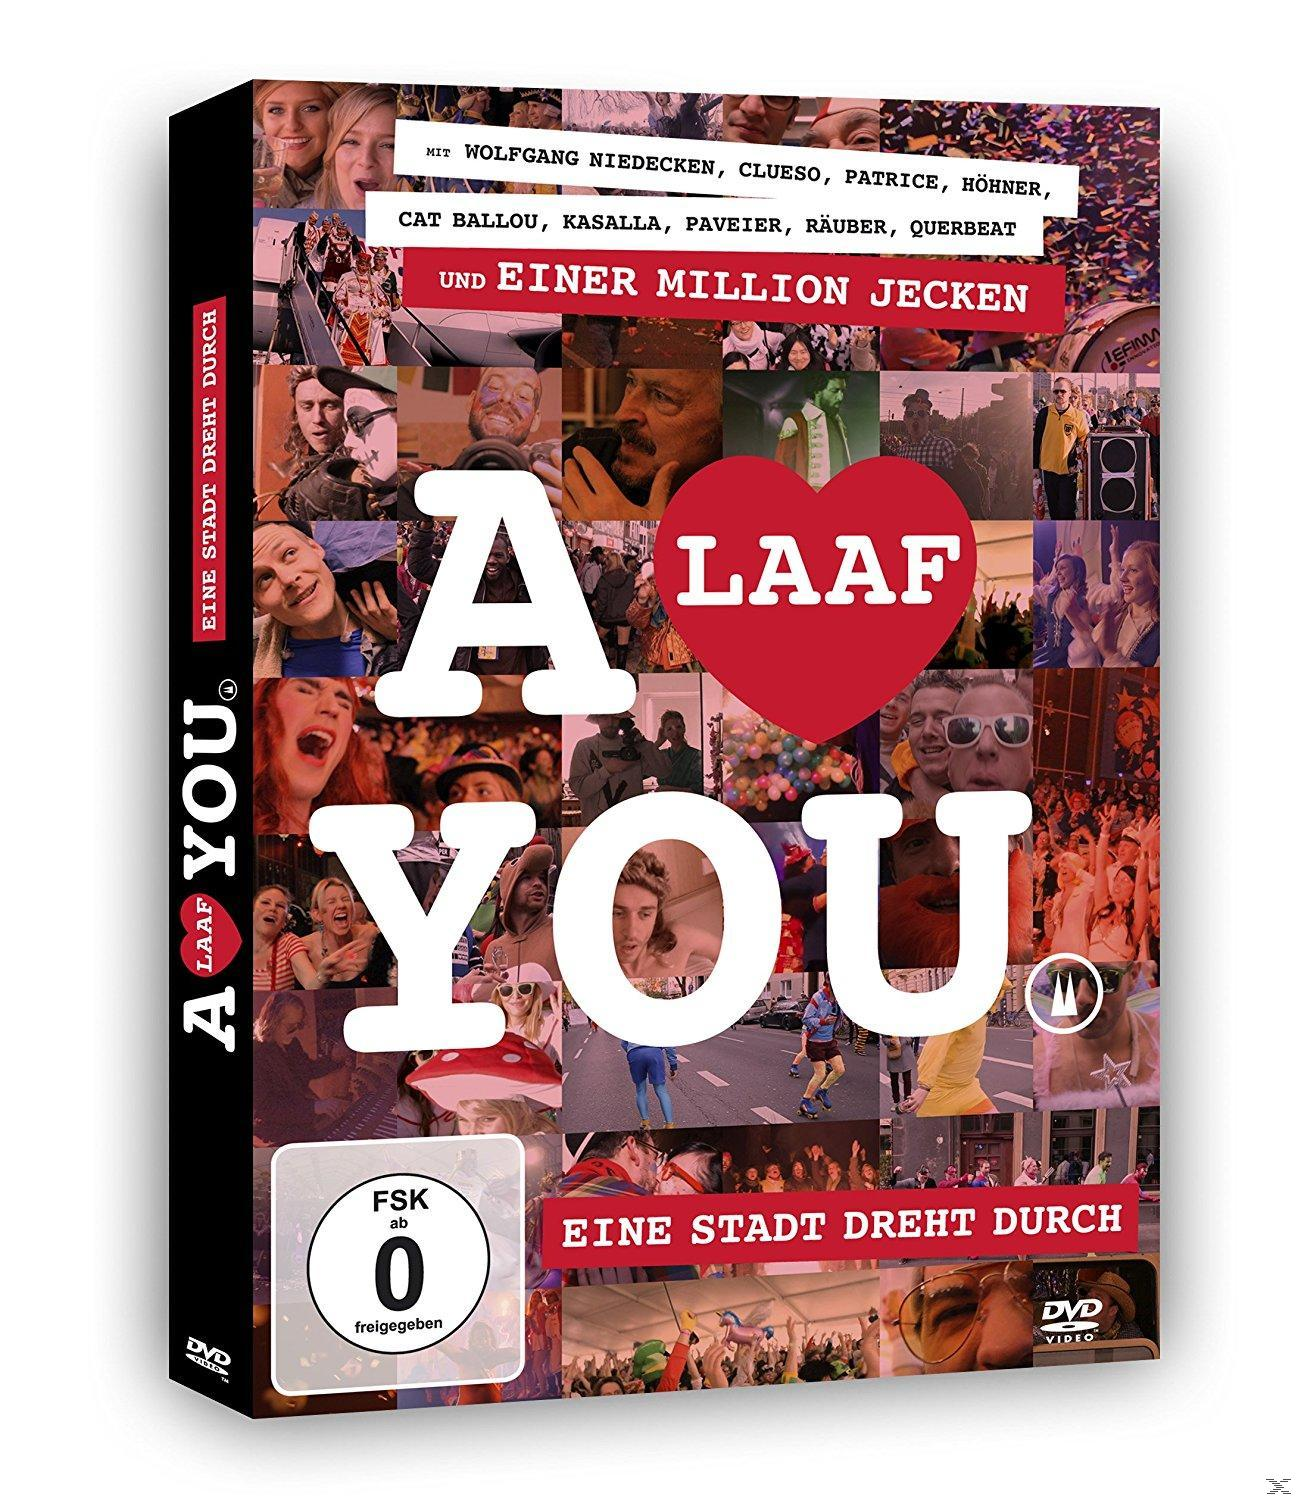 Alaaf You DVD